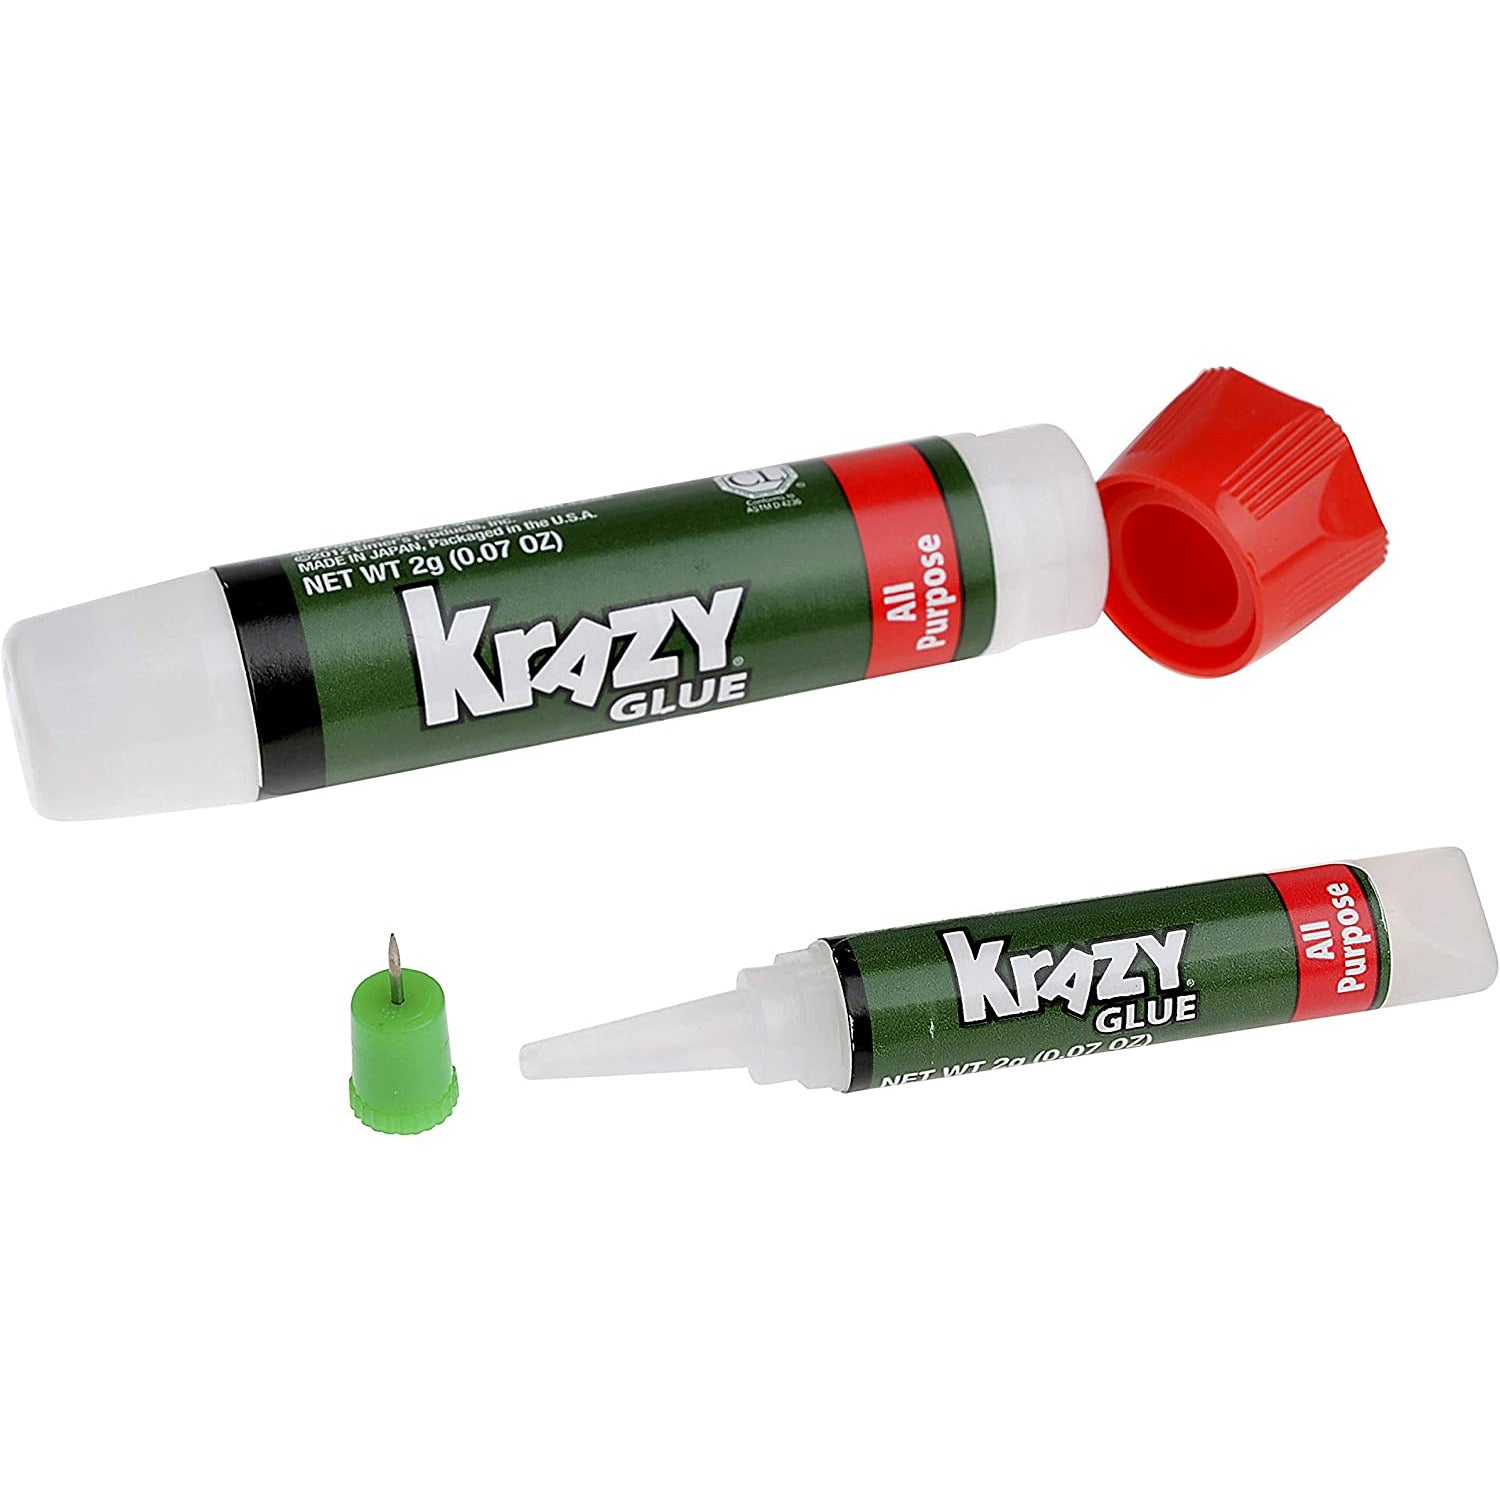 Krazy Glue All Purpose Super Glue - Single-Use Tubes, 0.5 g